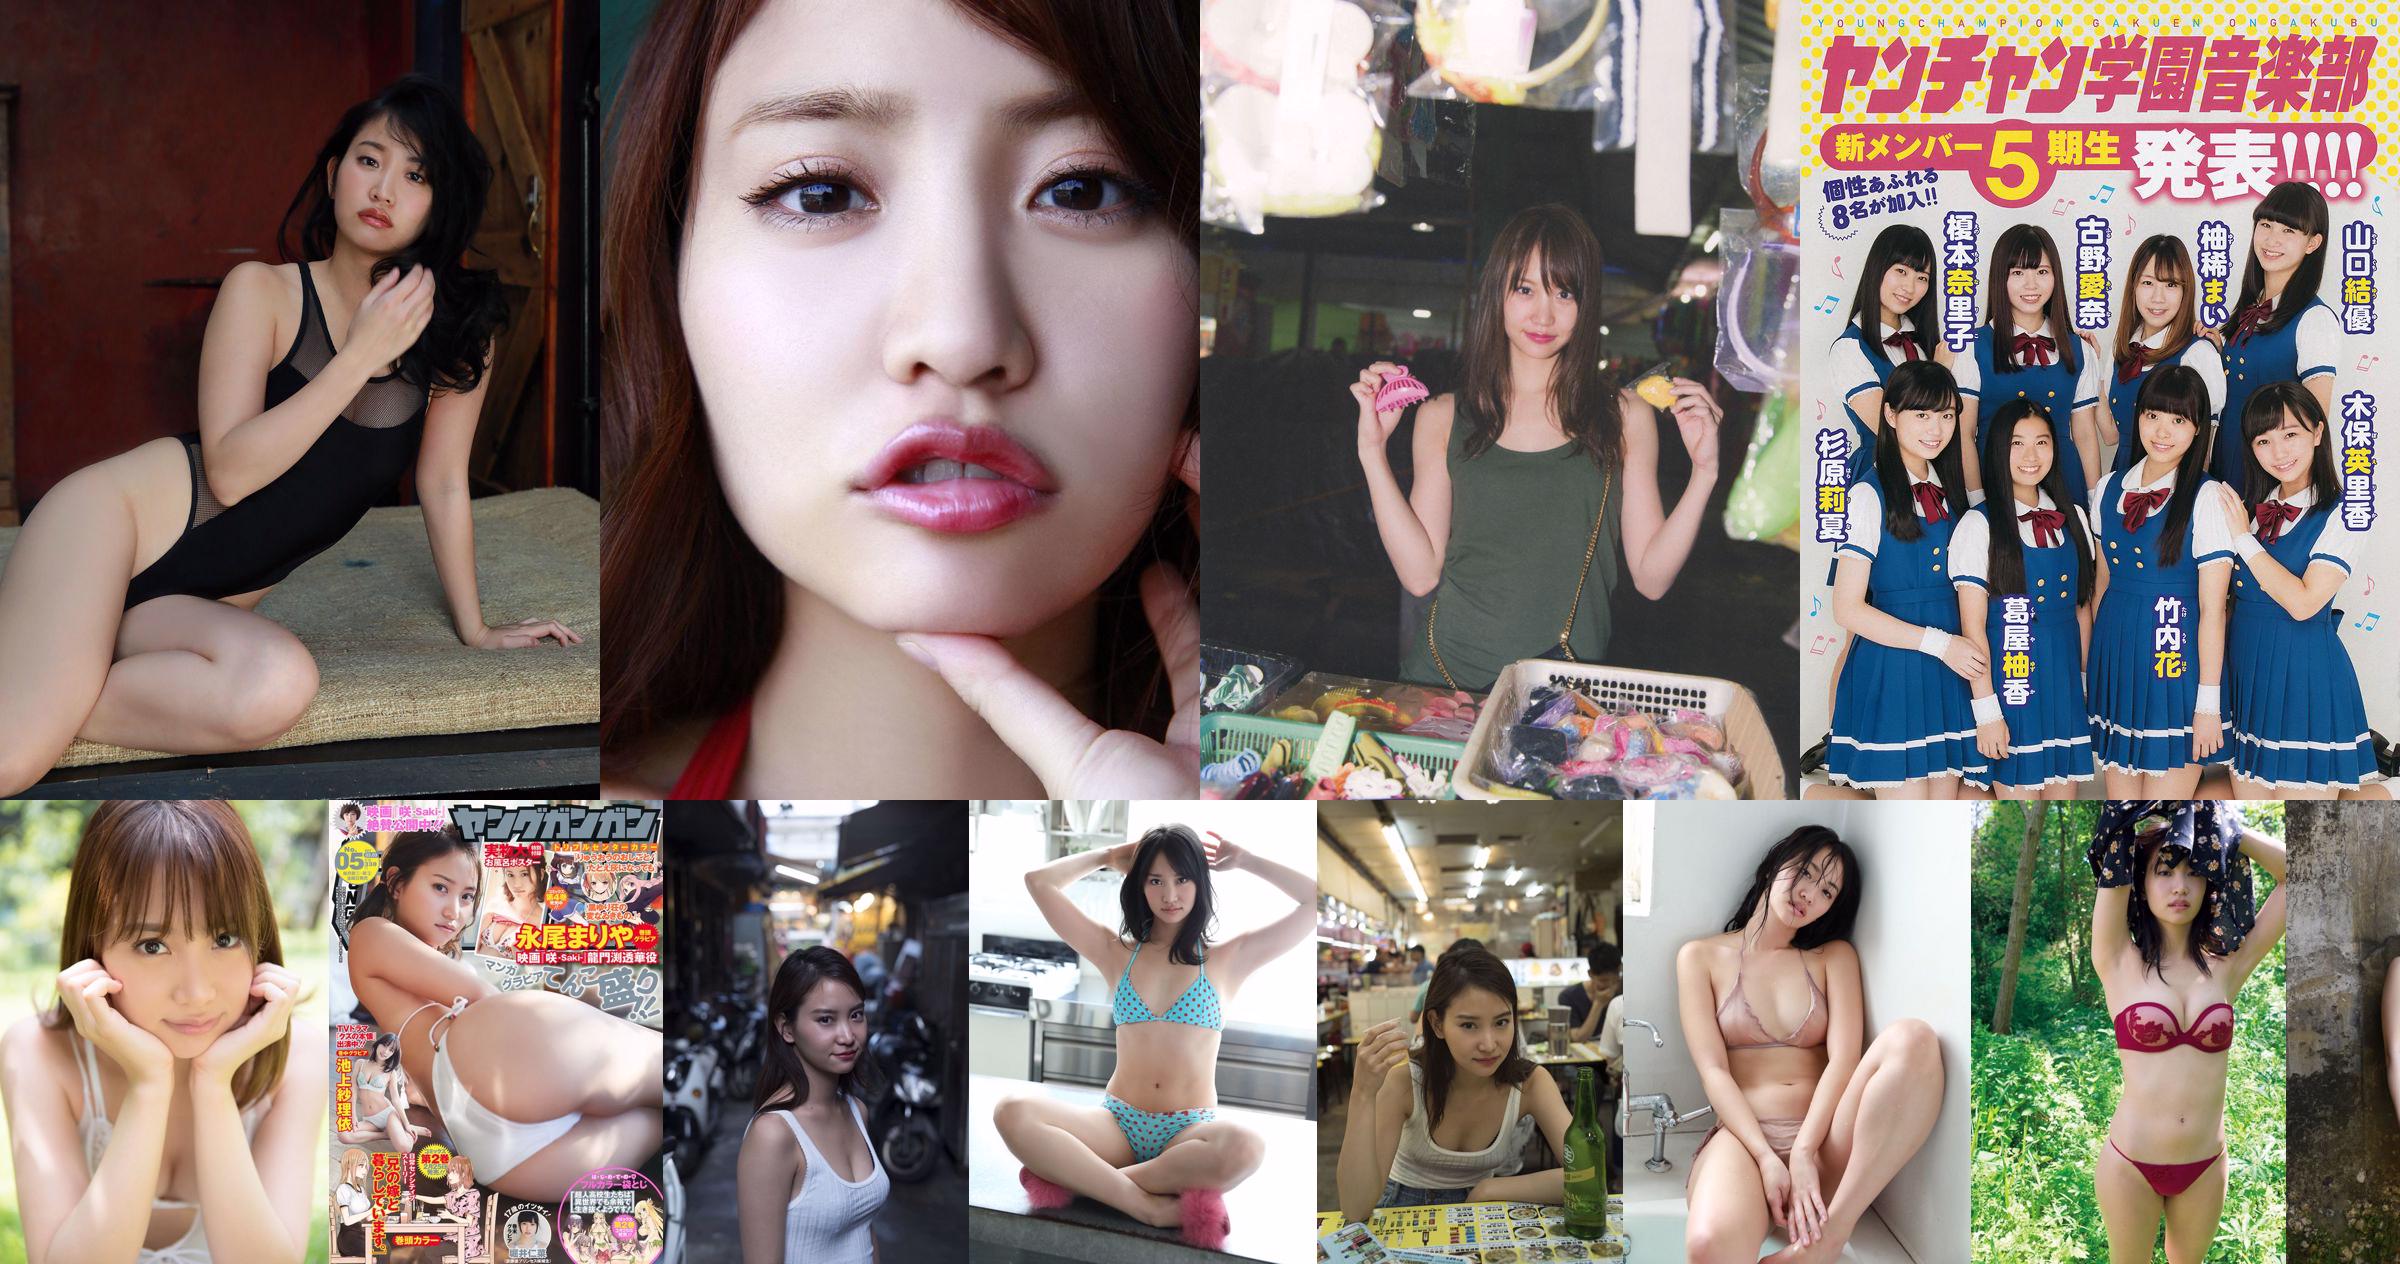 [Sabra.net] 2019.10 Cover Girl Nagao ま り や 『 ViVa! マ リ ヤ ー ジ ュ 』 No.5ef50a Page 4